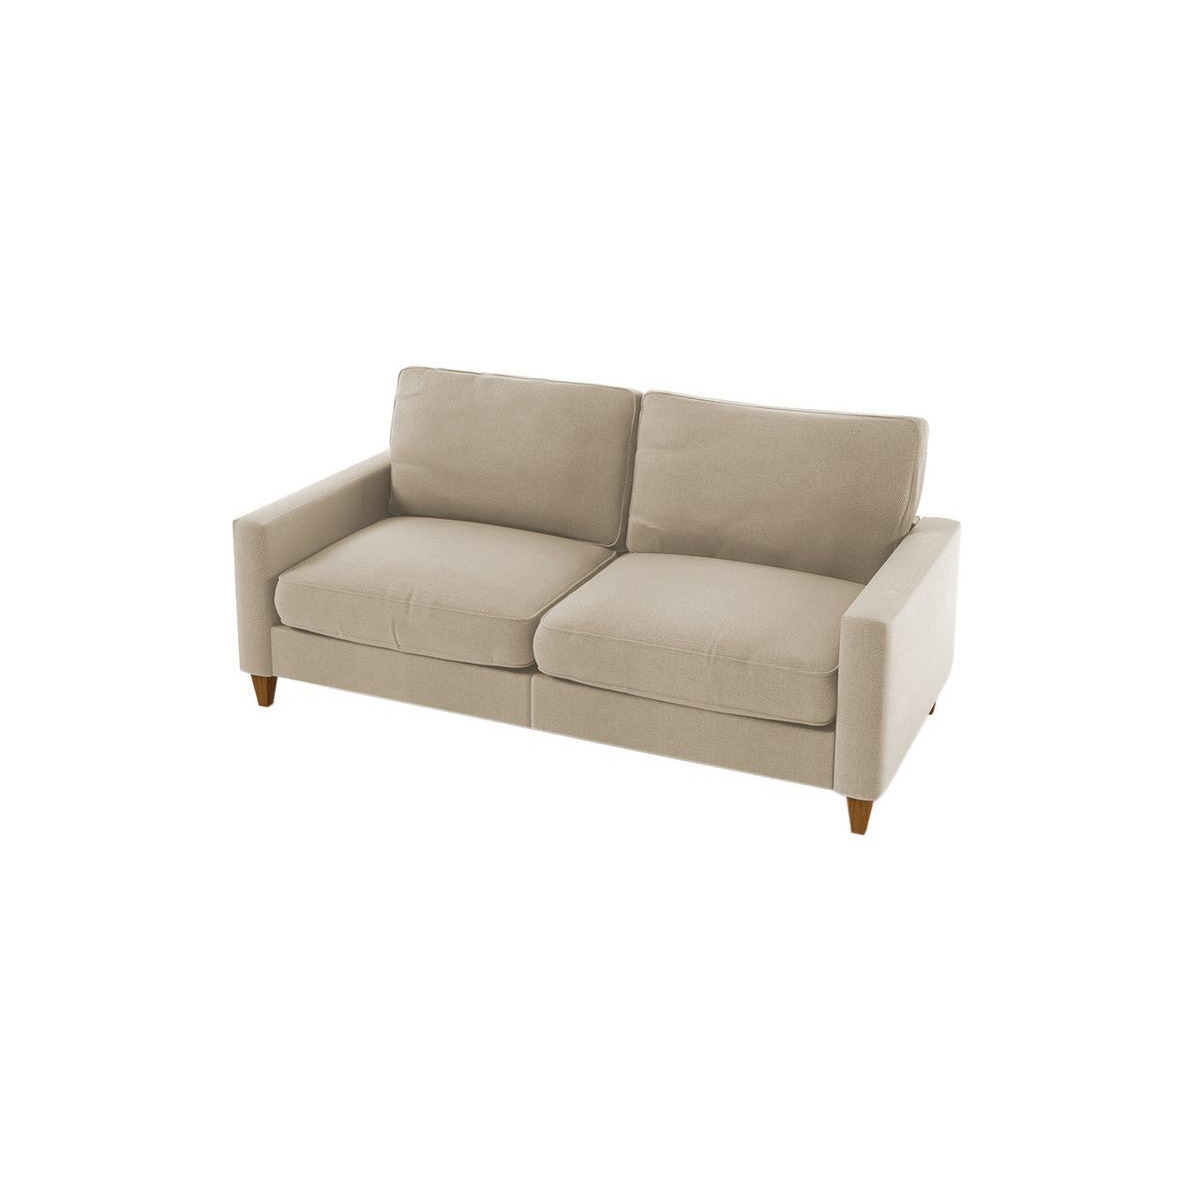 Isla 3 Seater Sofa, beige - image 1